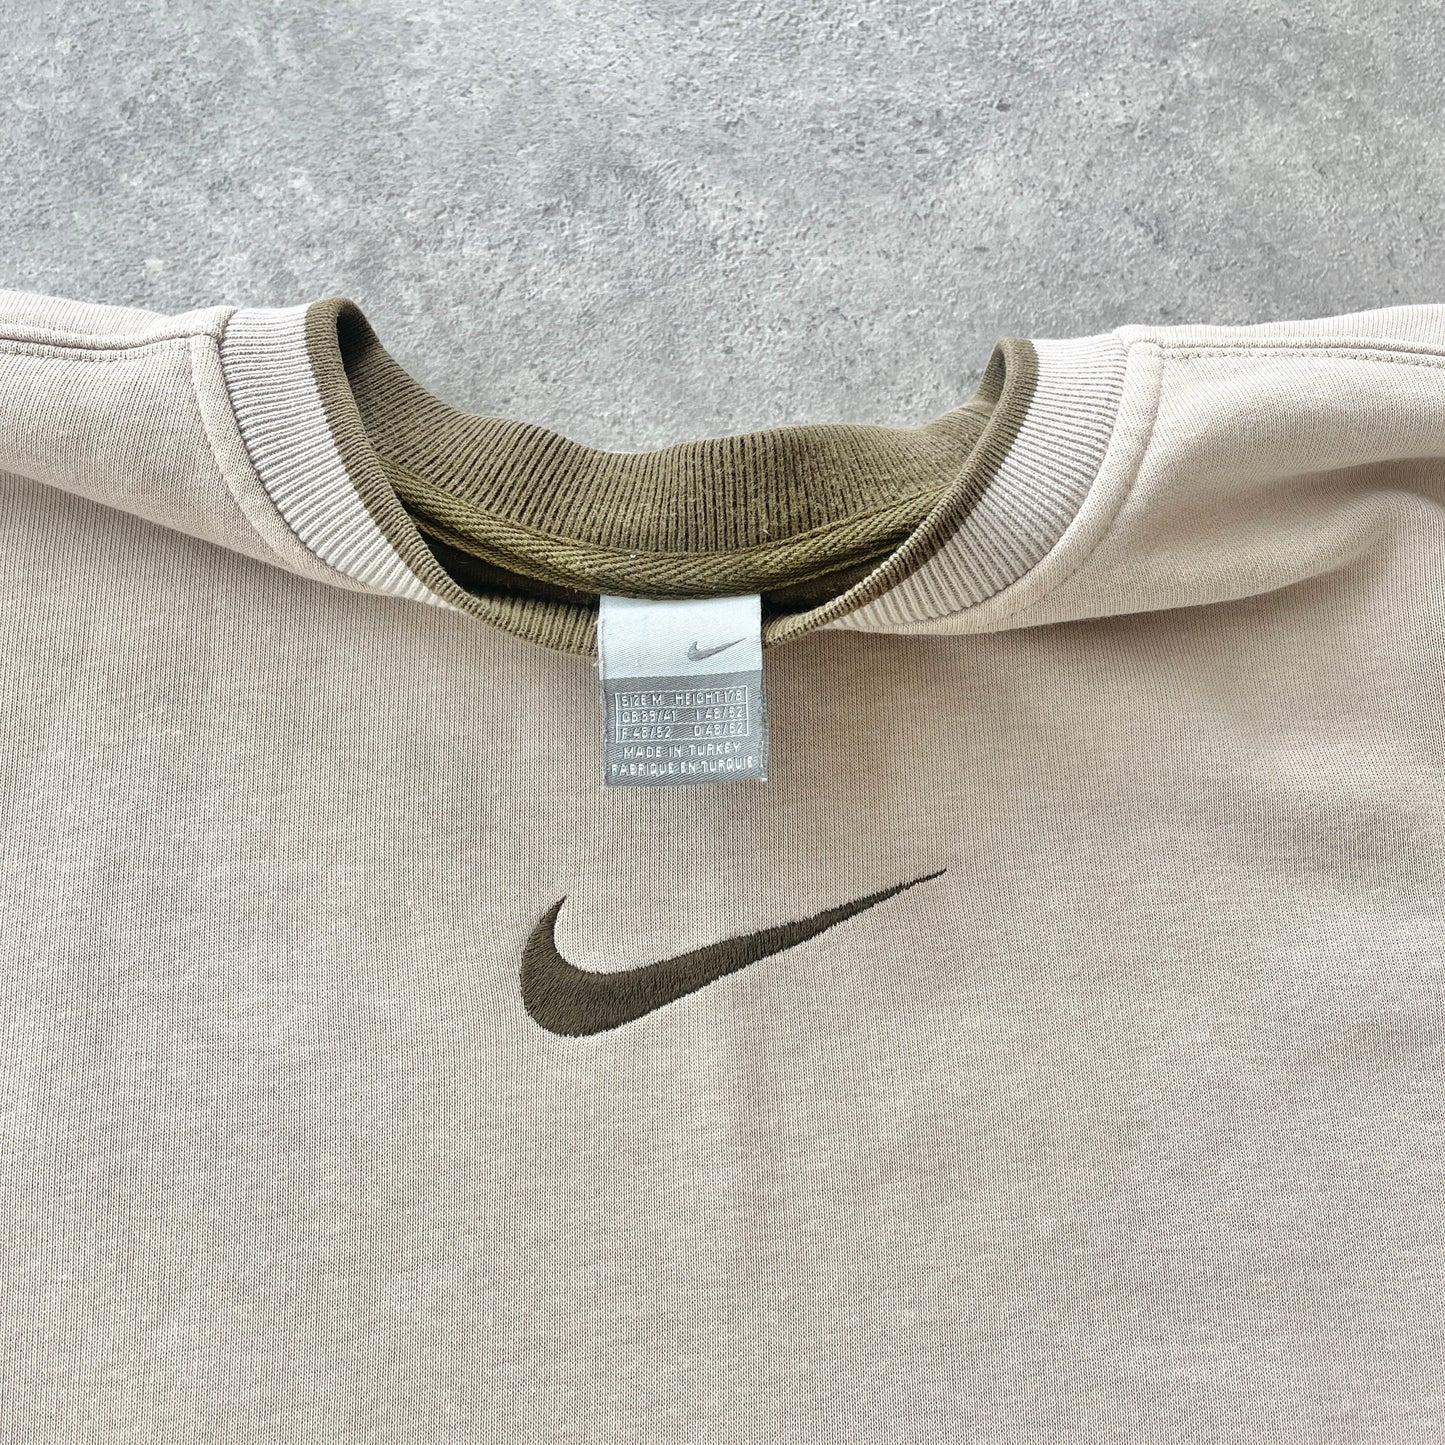 Nike RARE 2000s heavyweight embroidered sweatshirt (M)